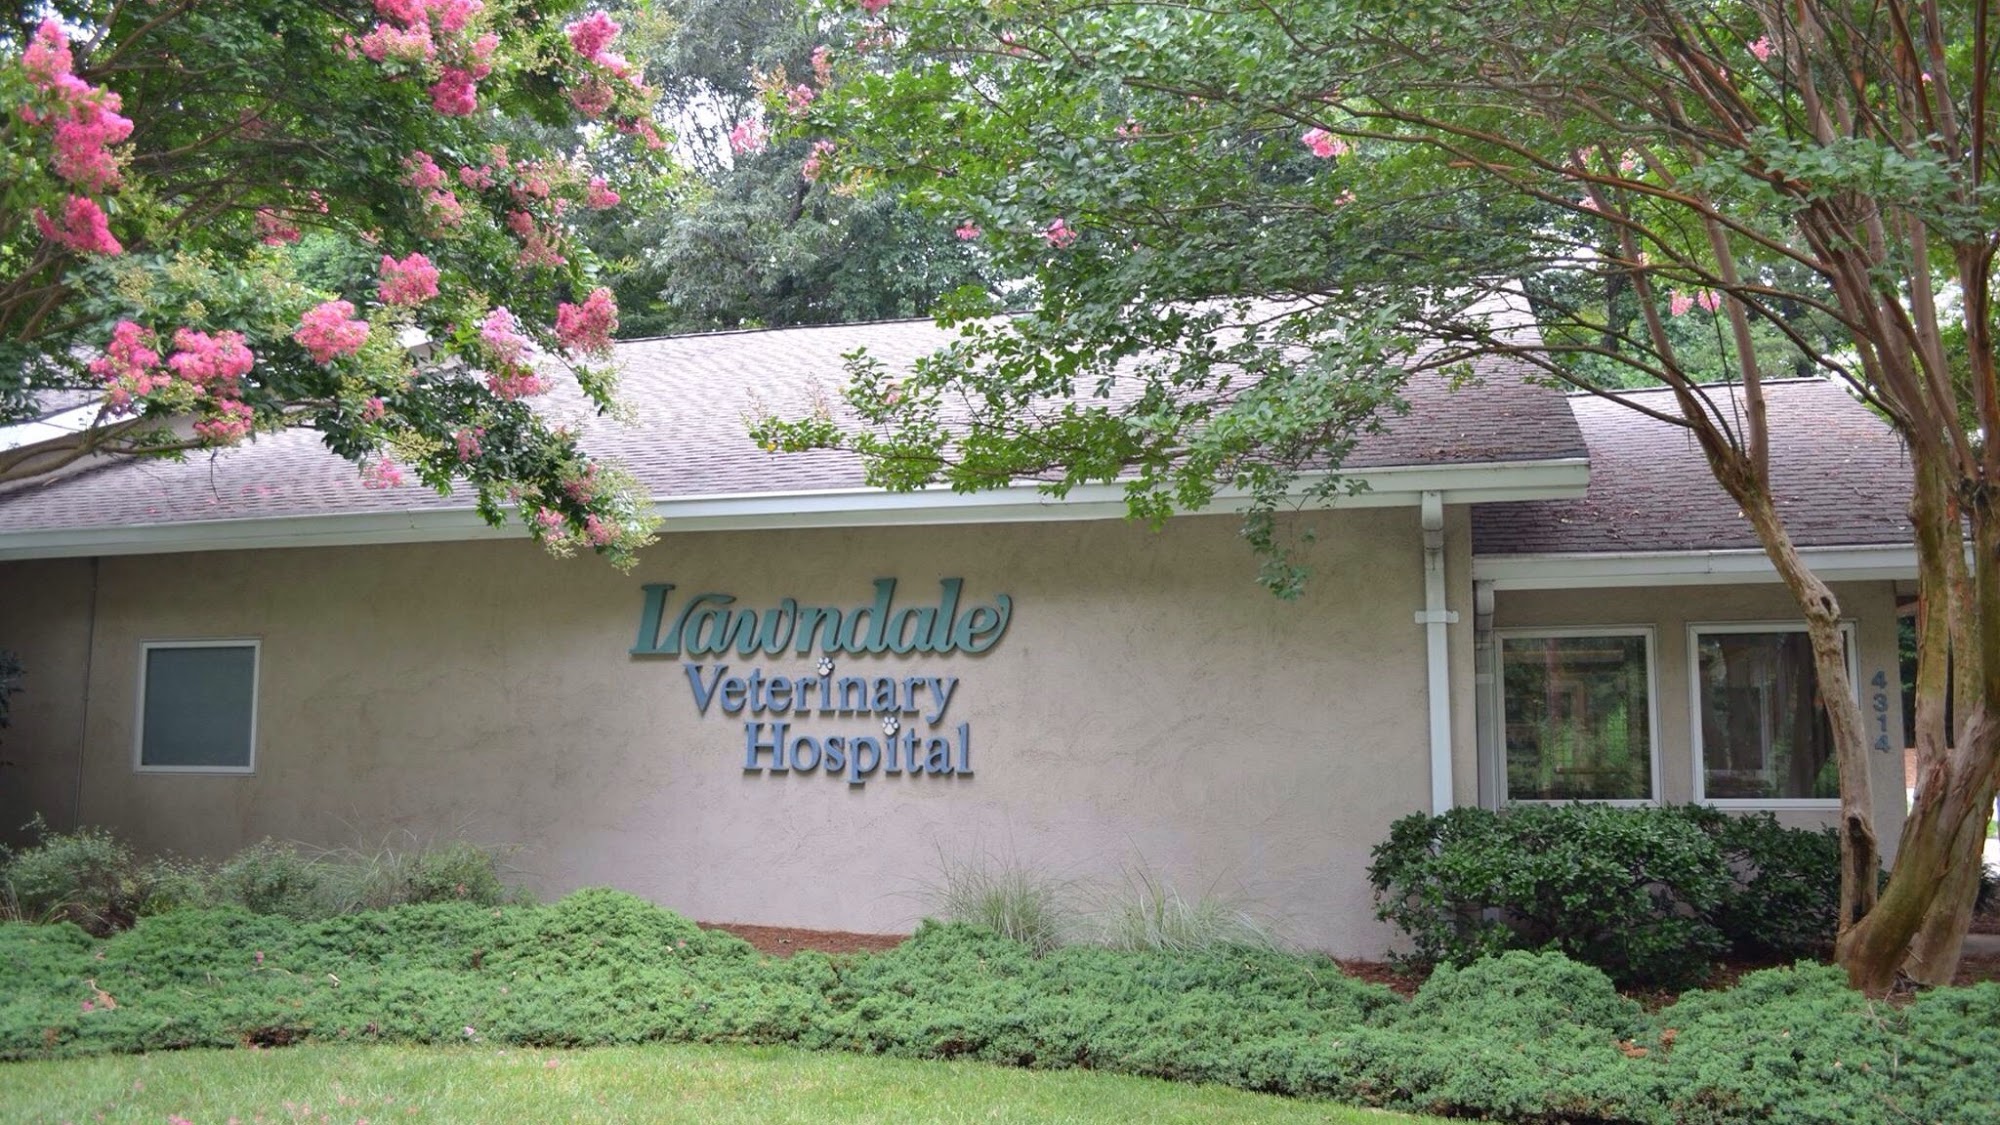 Lawndale Veterinary Hospital